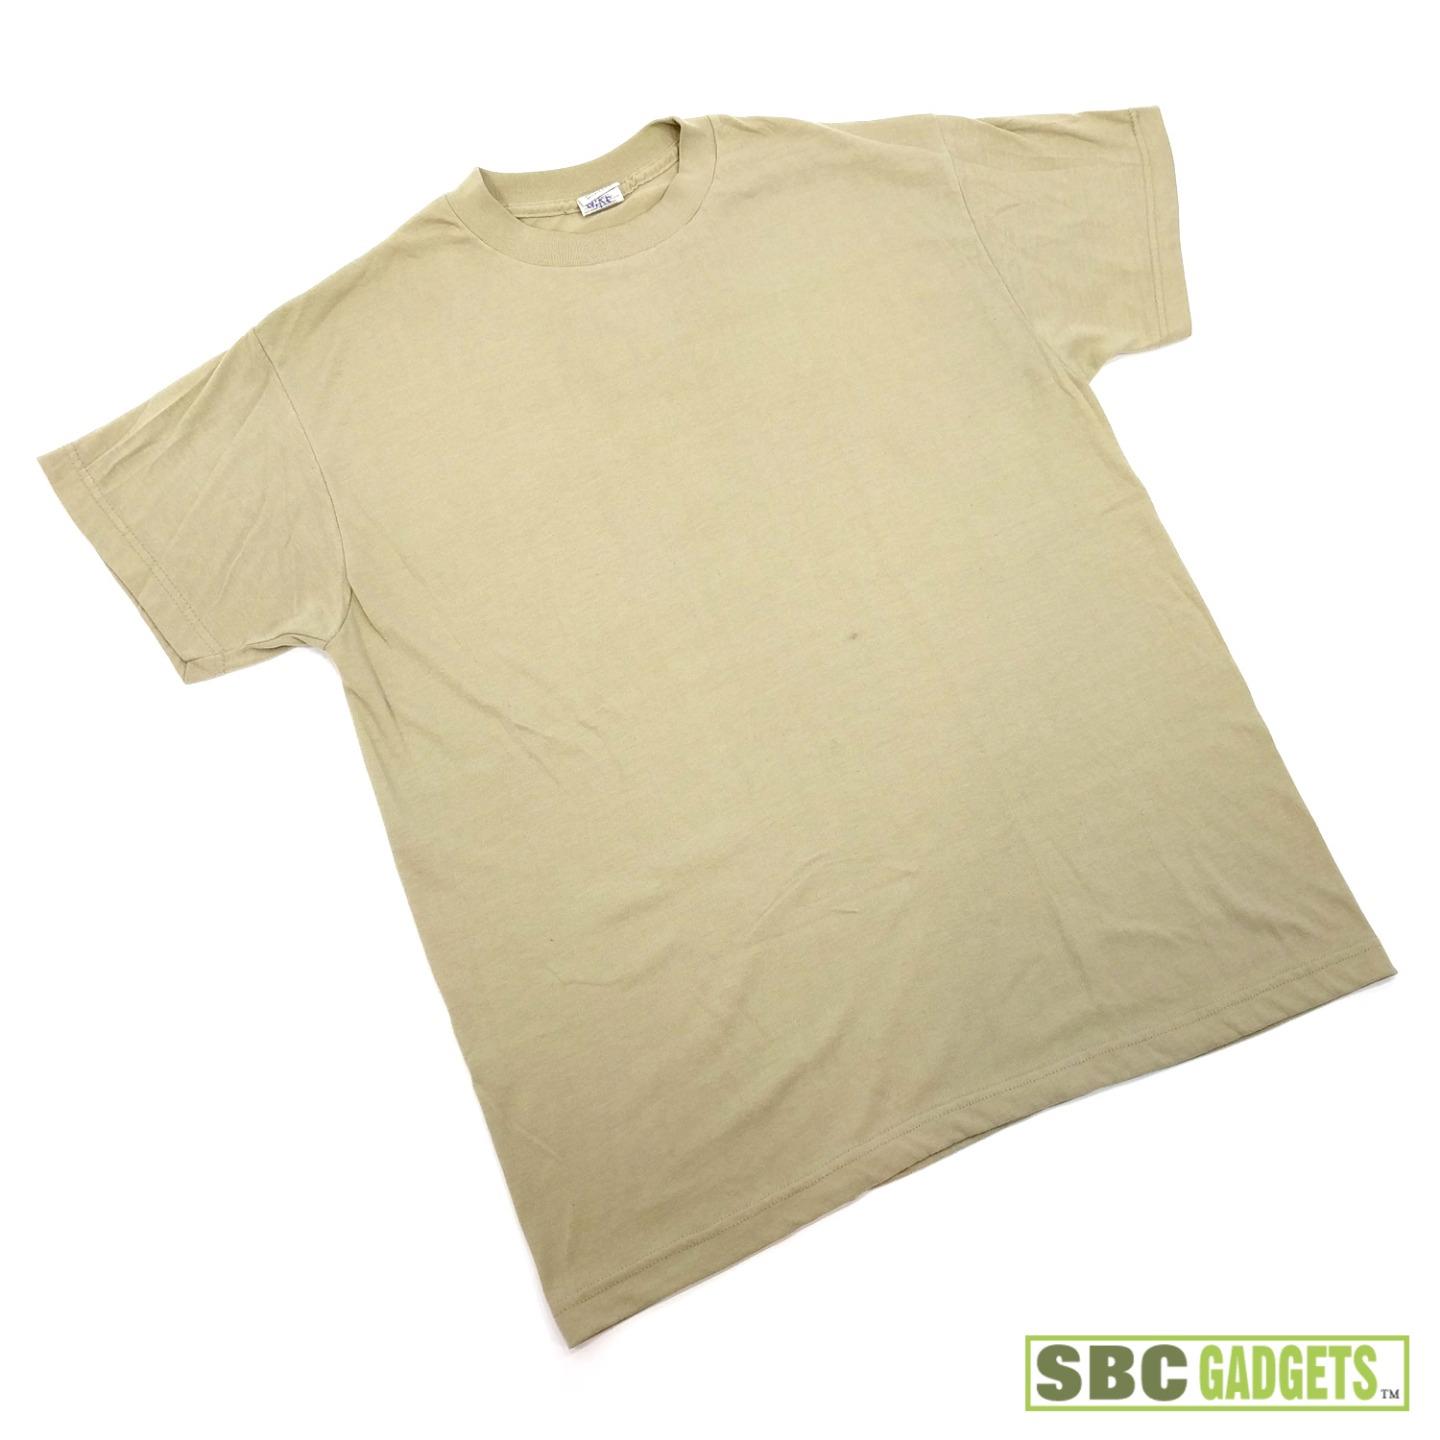 Army T-Shirt, Tan (Sand) - For ACU/ABU Uniform (NSN: 8415-01-519-8785 ...